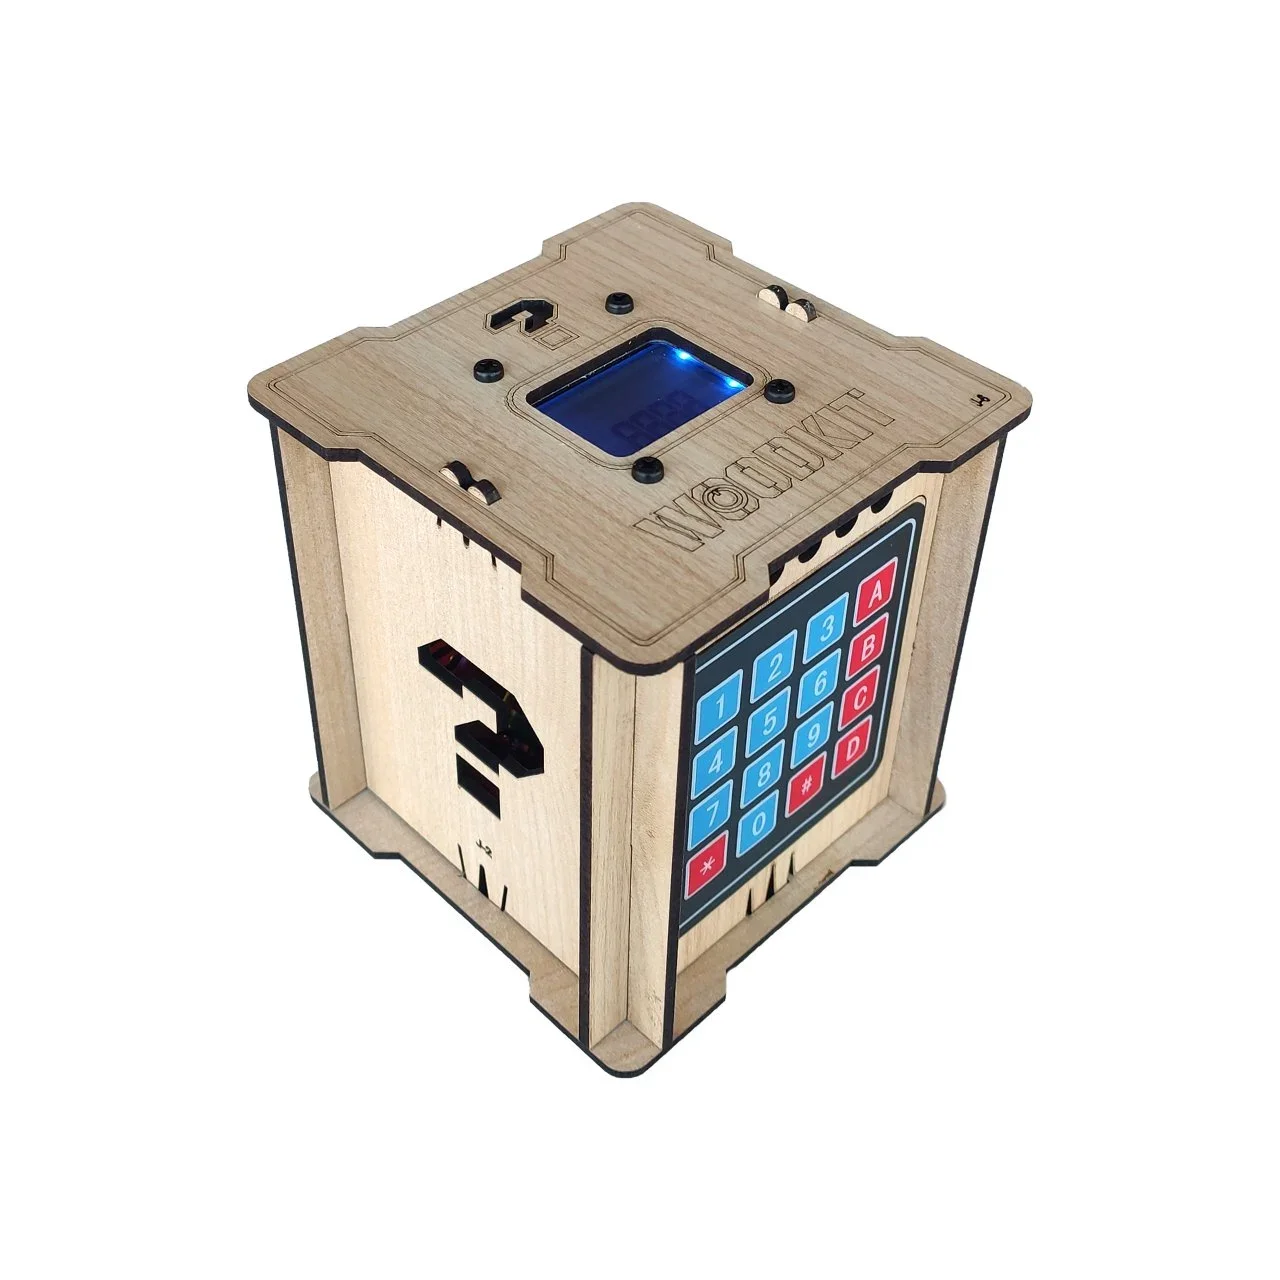 Wood-Kit Robotik Kodlama kiti - Sayı Tahmin Oyunu